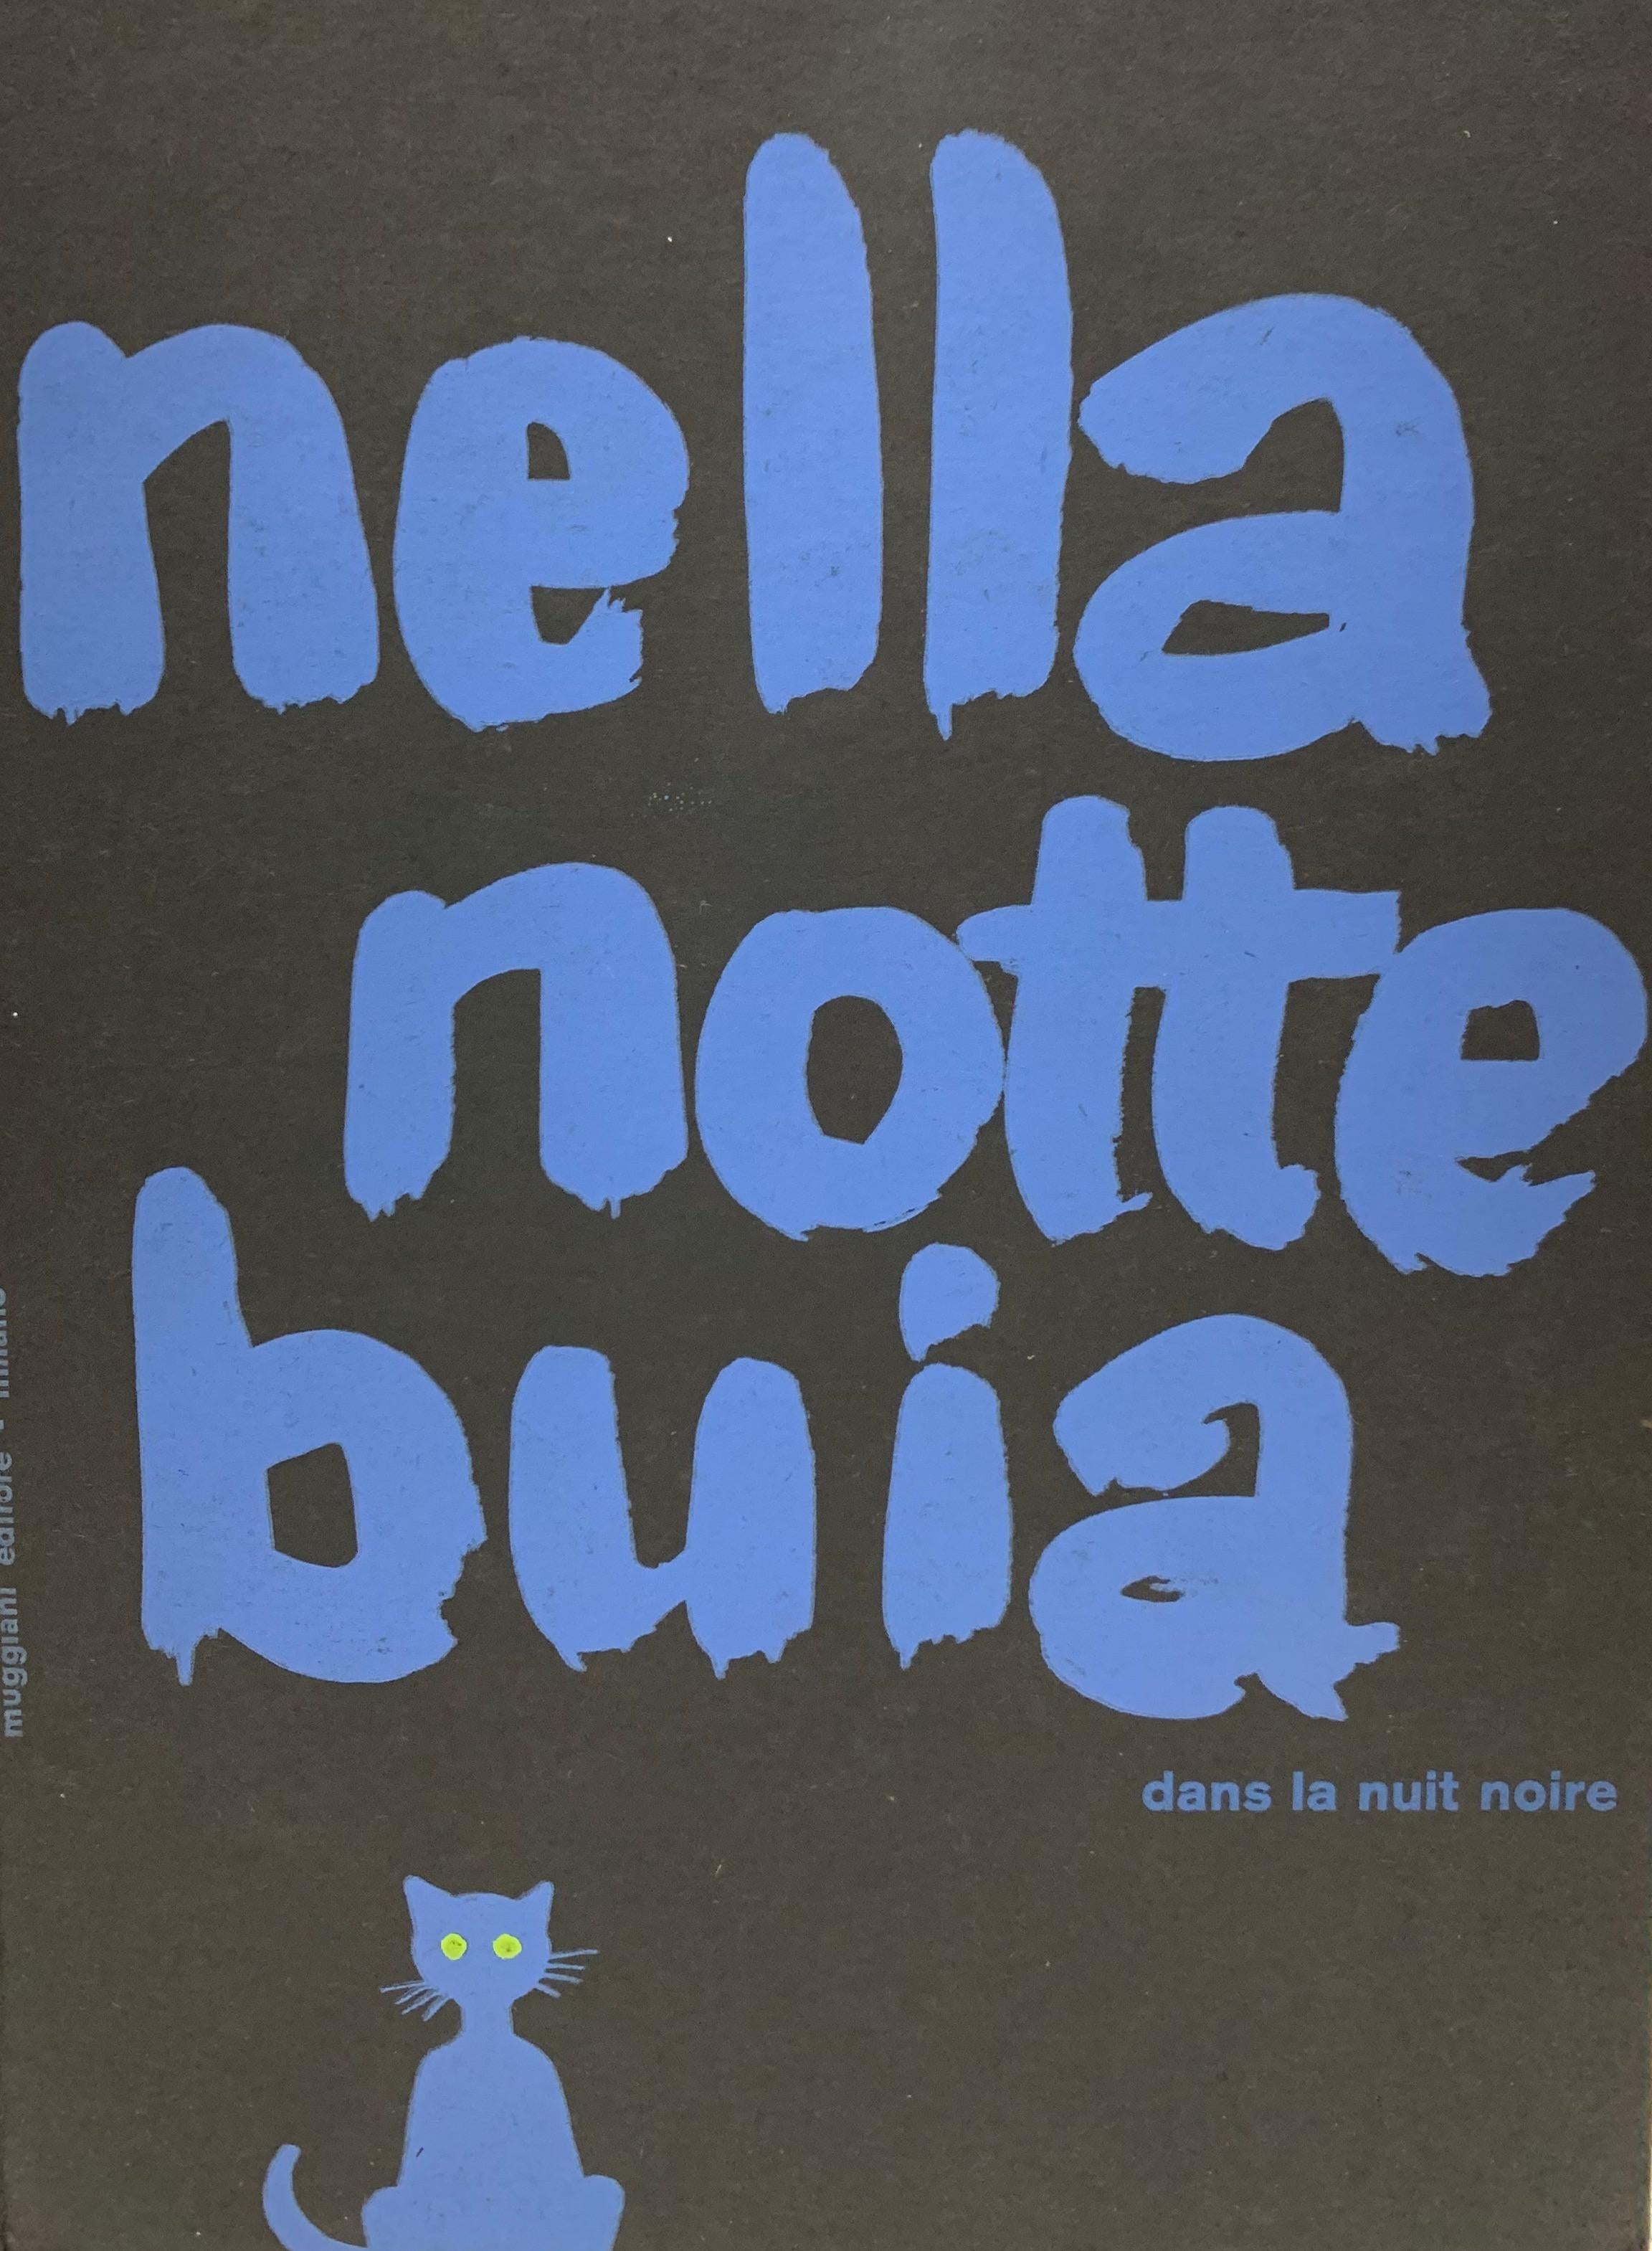 Animal Print Bruno Munari - Nella Notte Buia / dans la nuit noire